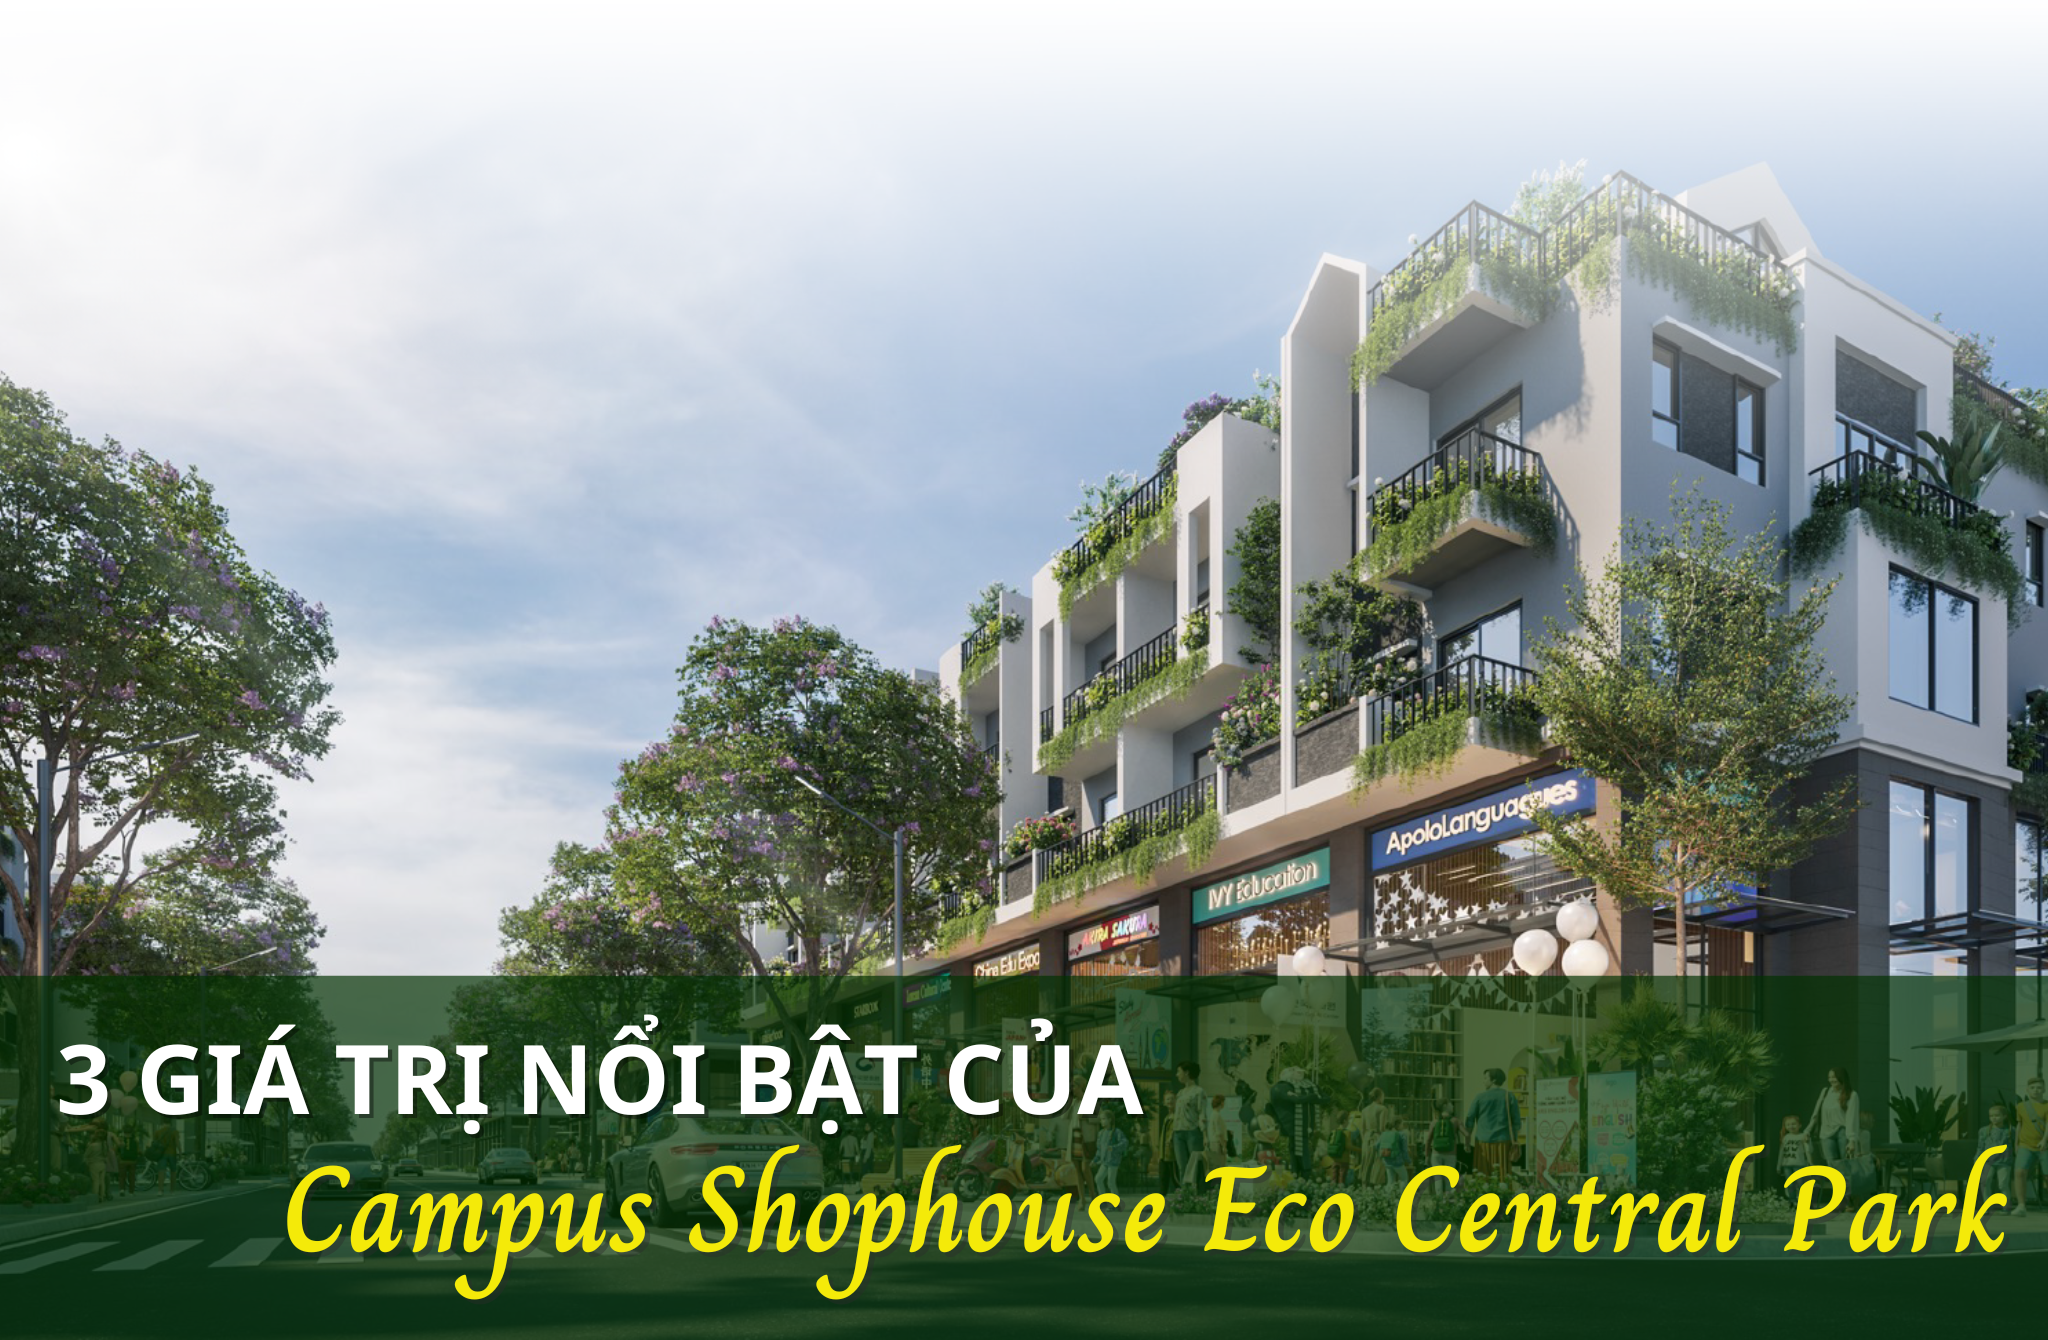 3 giá trị nổi bật của Campus Shophouse Eco Central Park